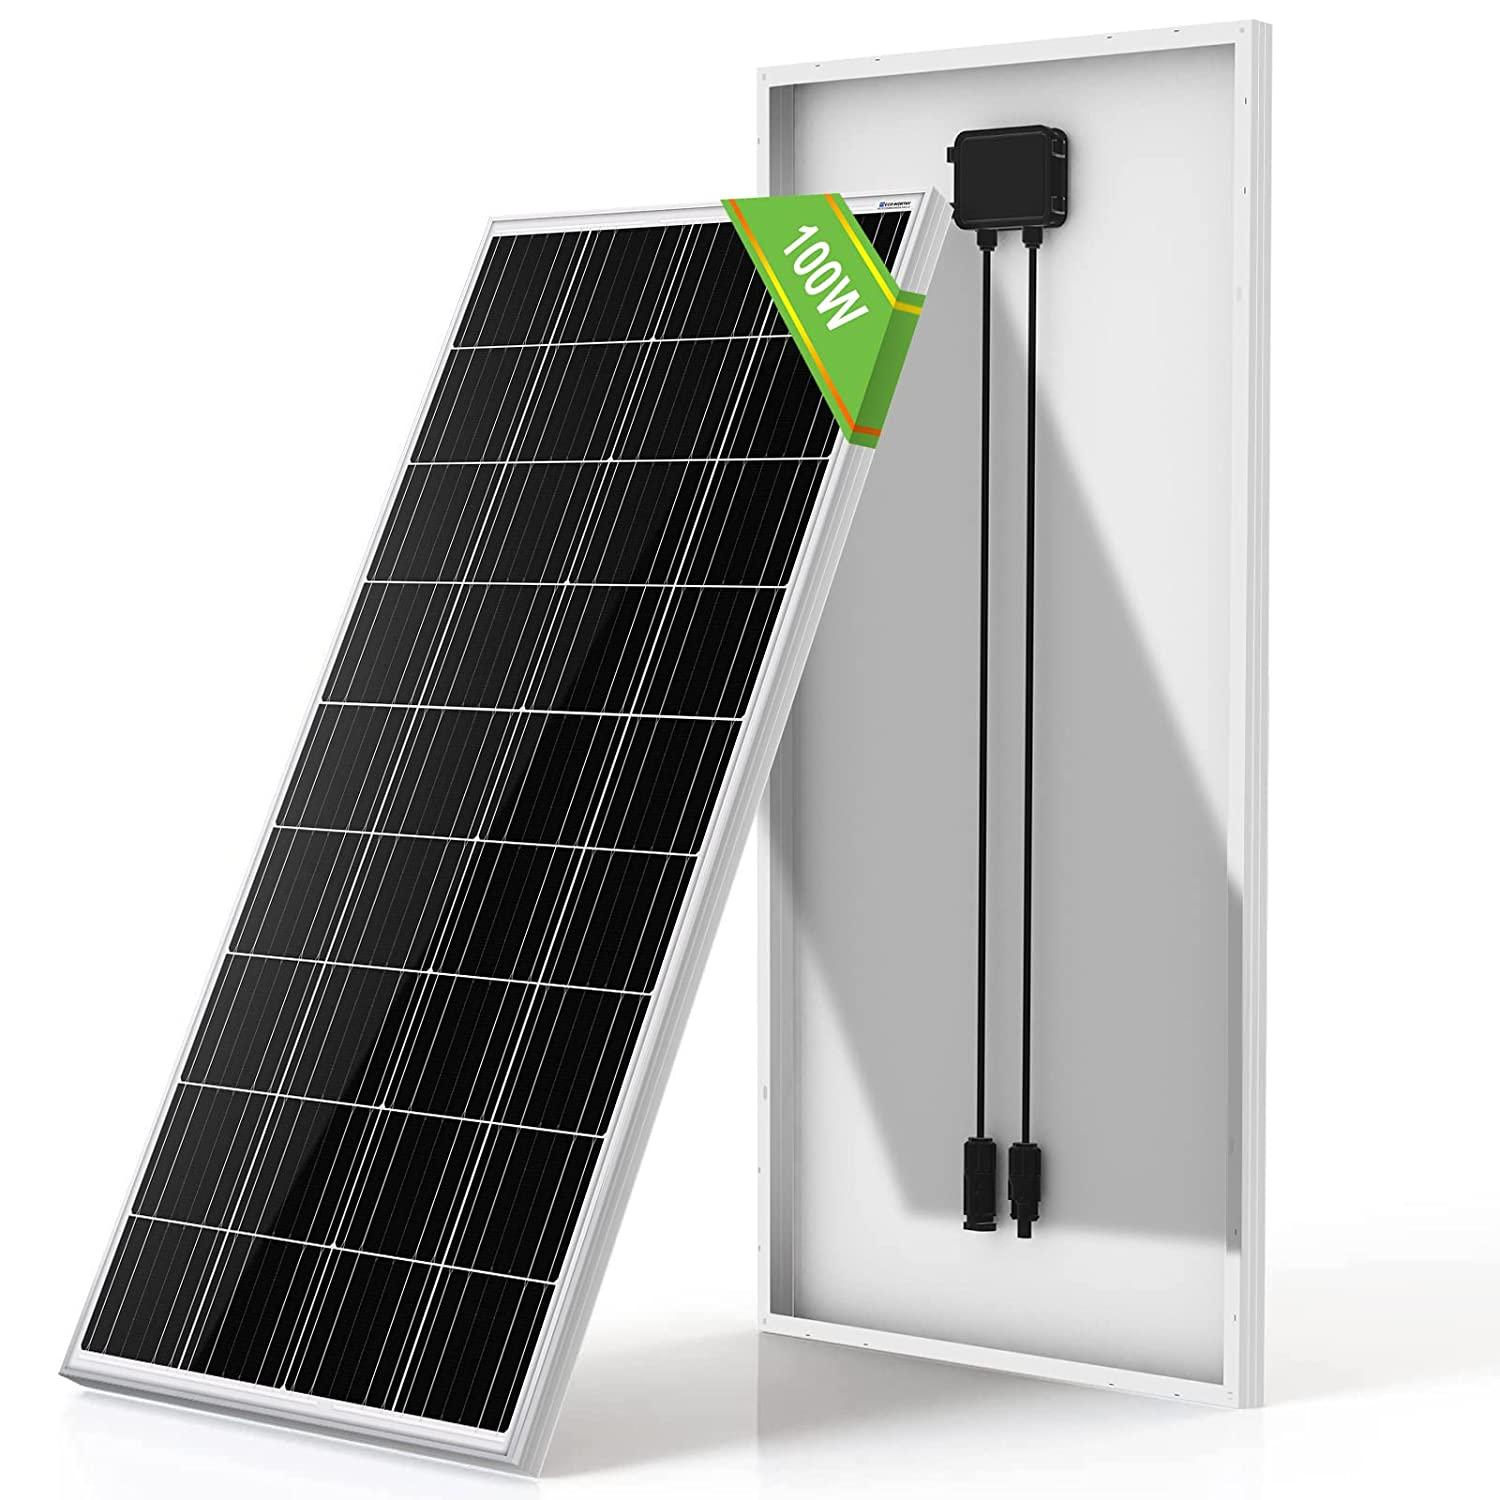 ECO-WORTHY 100W 12V Monocrystalline Solar Panel for $62.49 Shipped